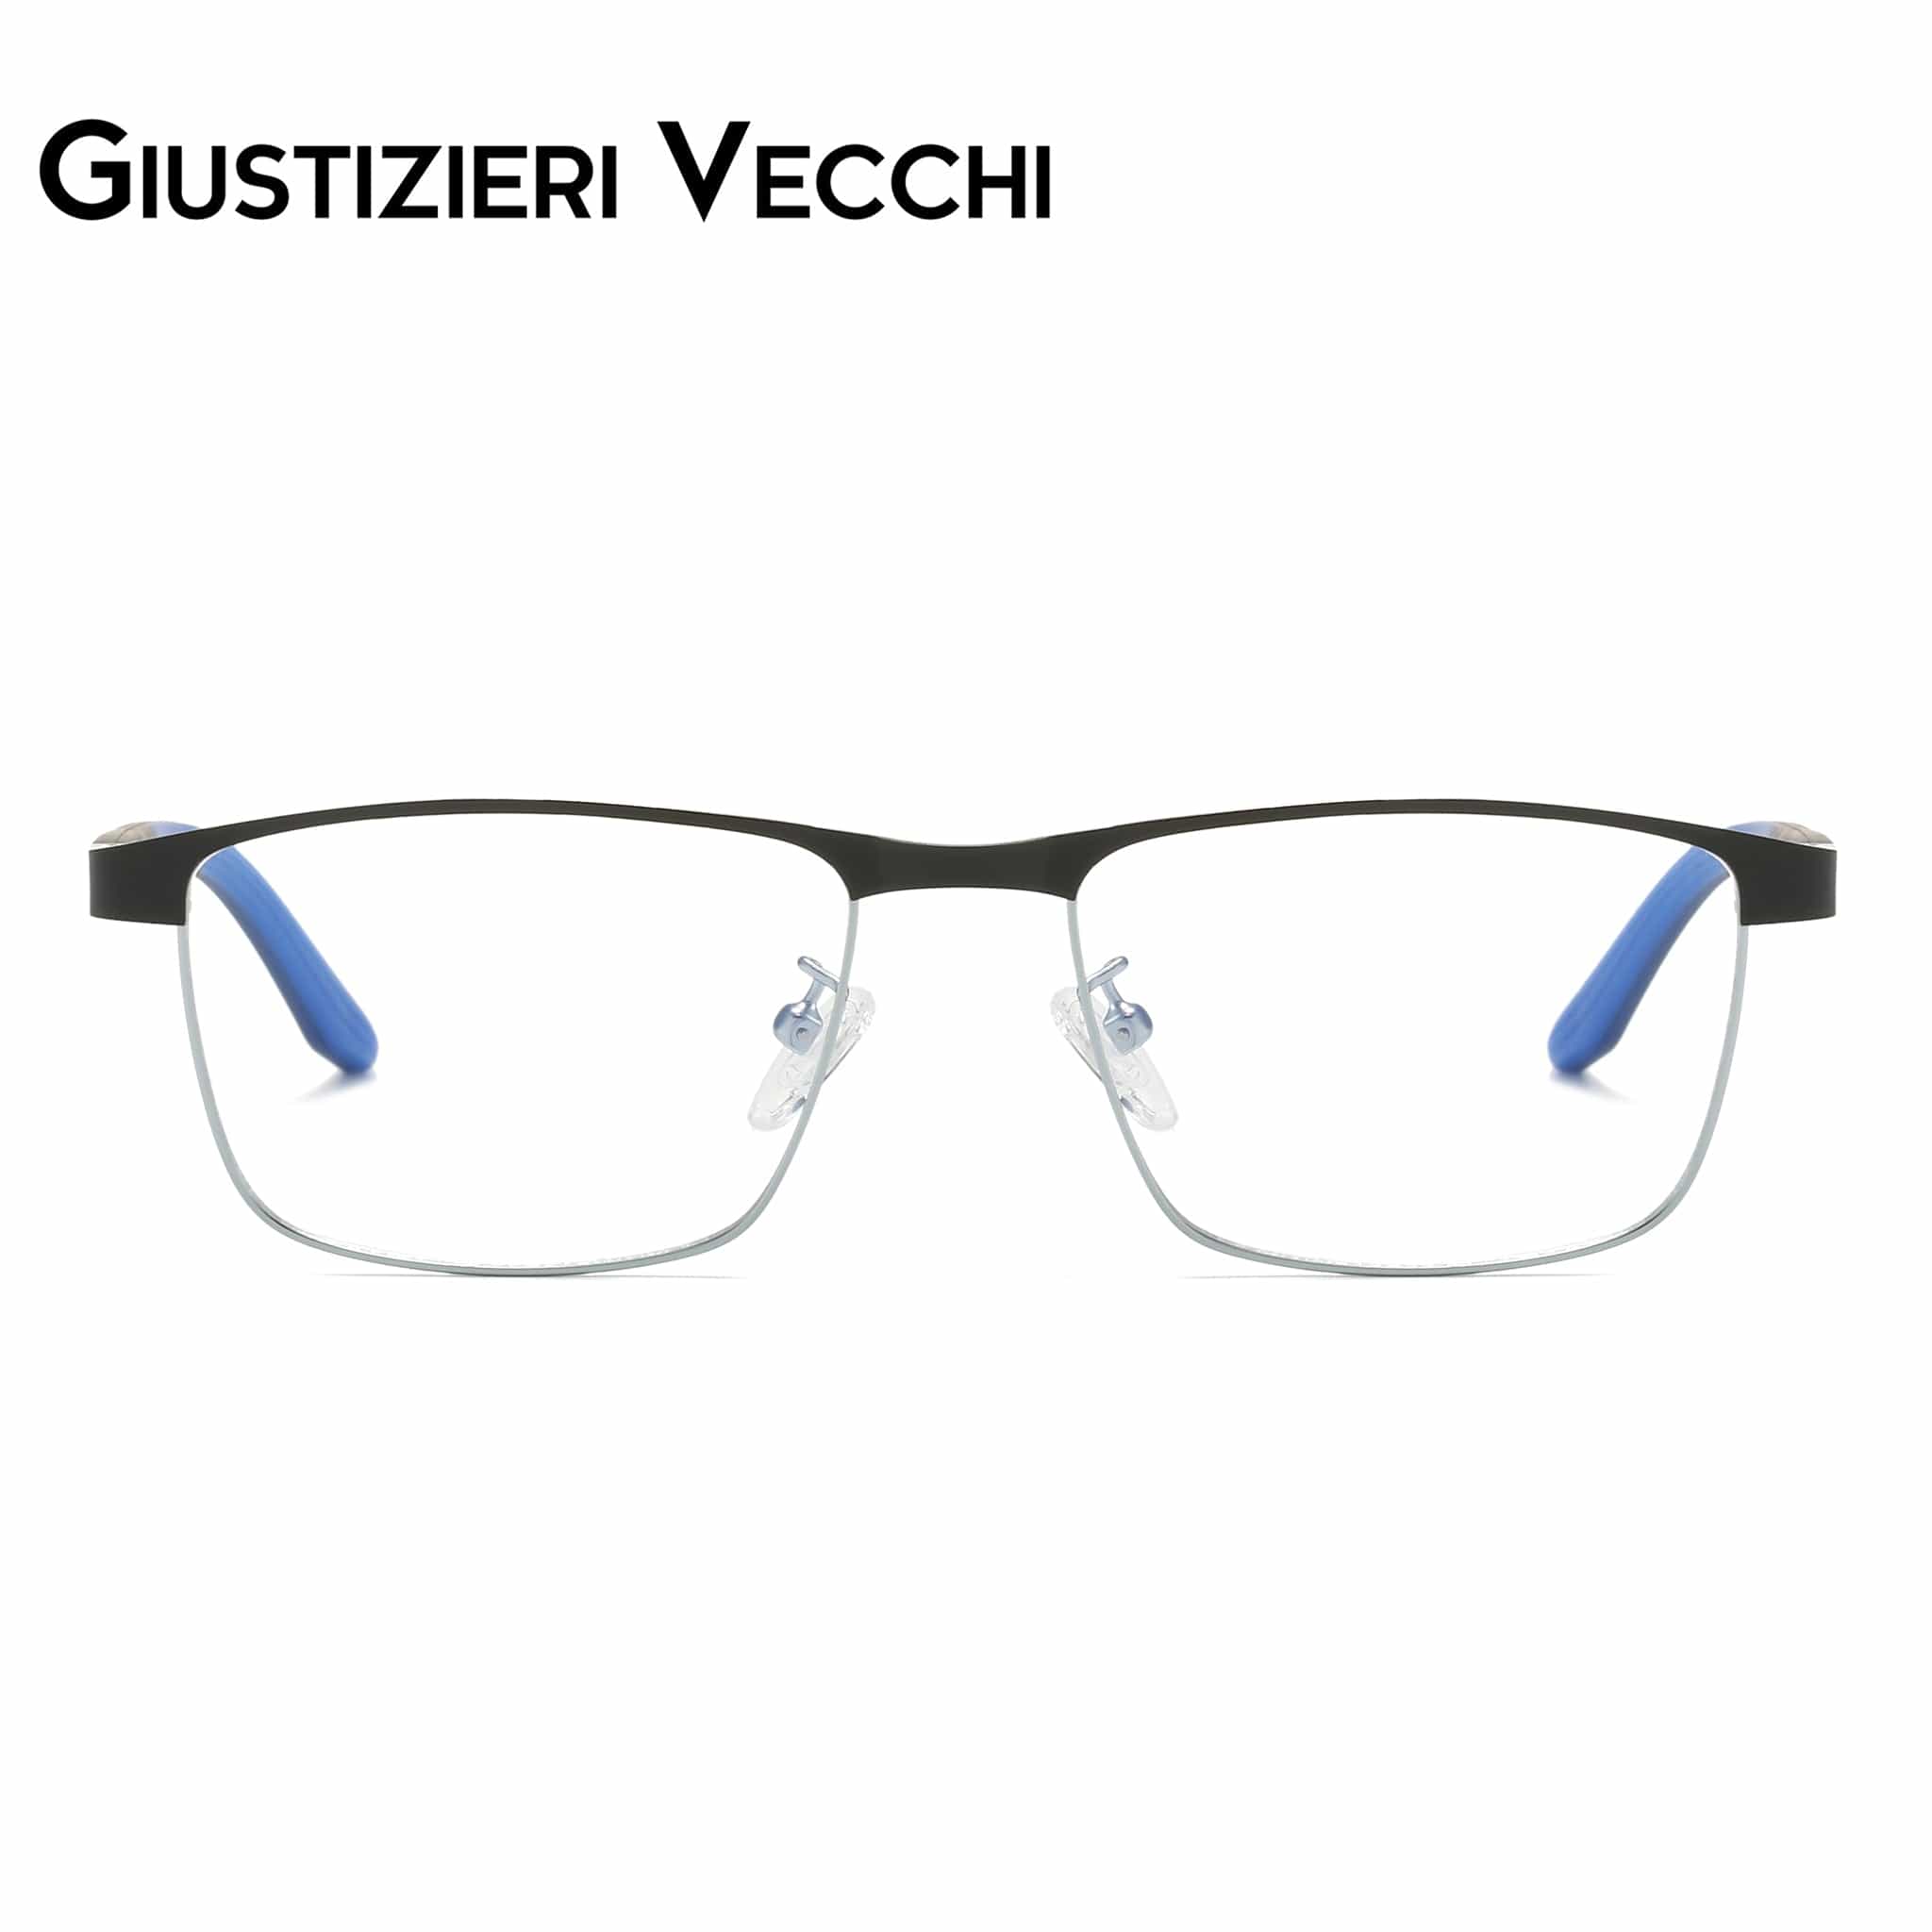 GIUSTIZIERI VECCHI Eyeglasses Medium / Black with Blue Summer Breeze Duo